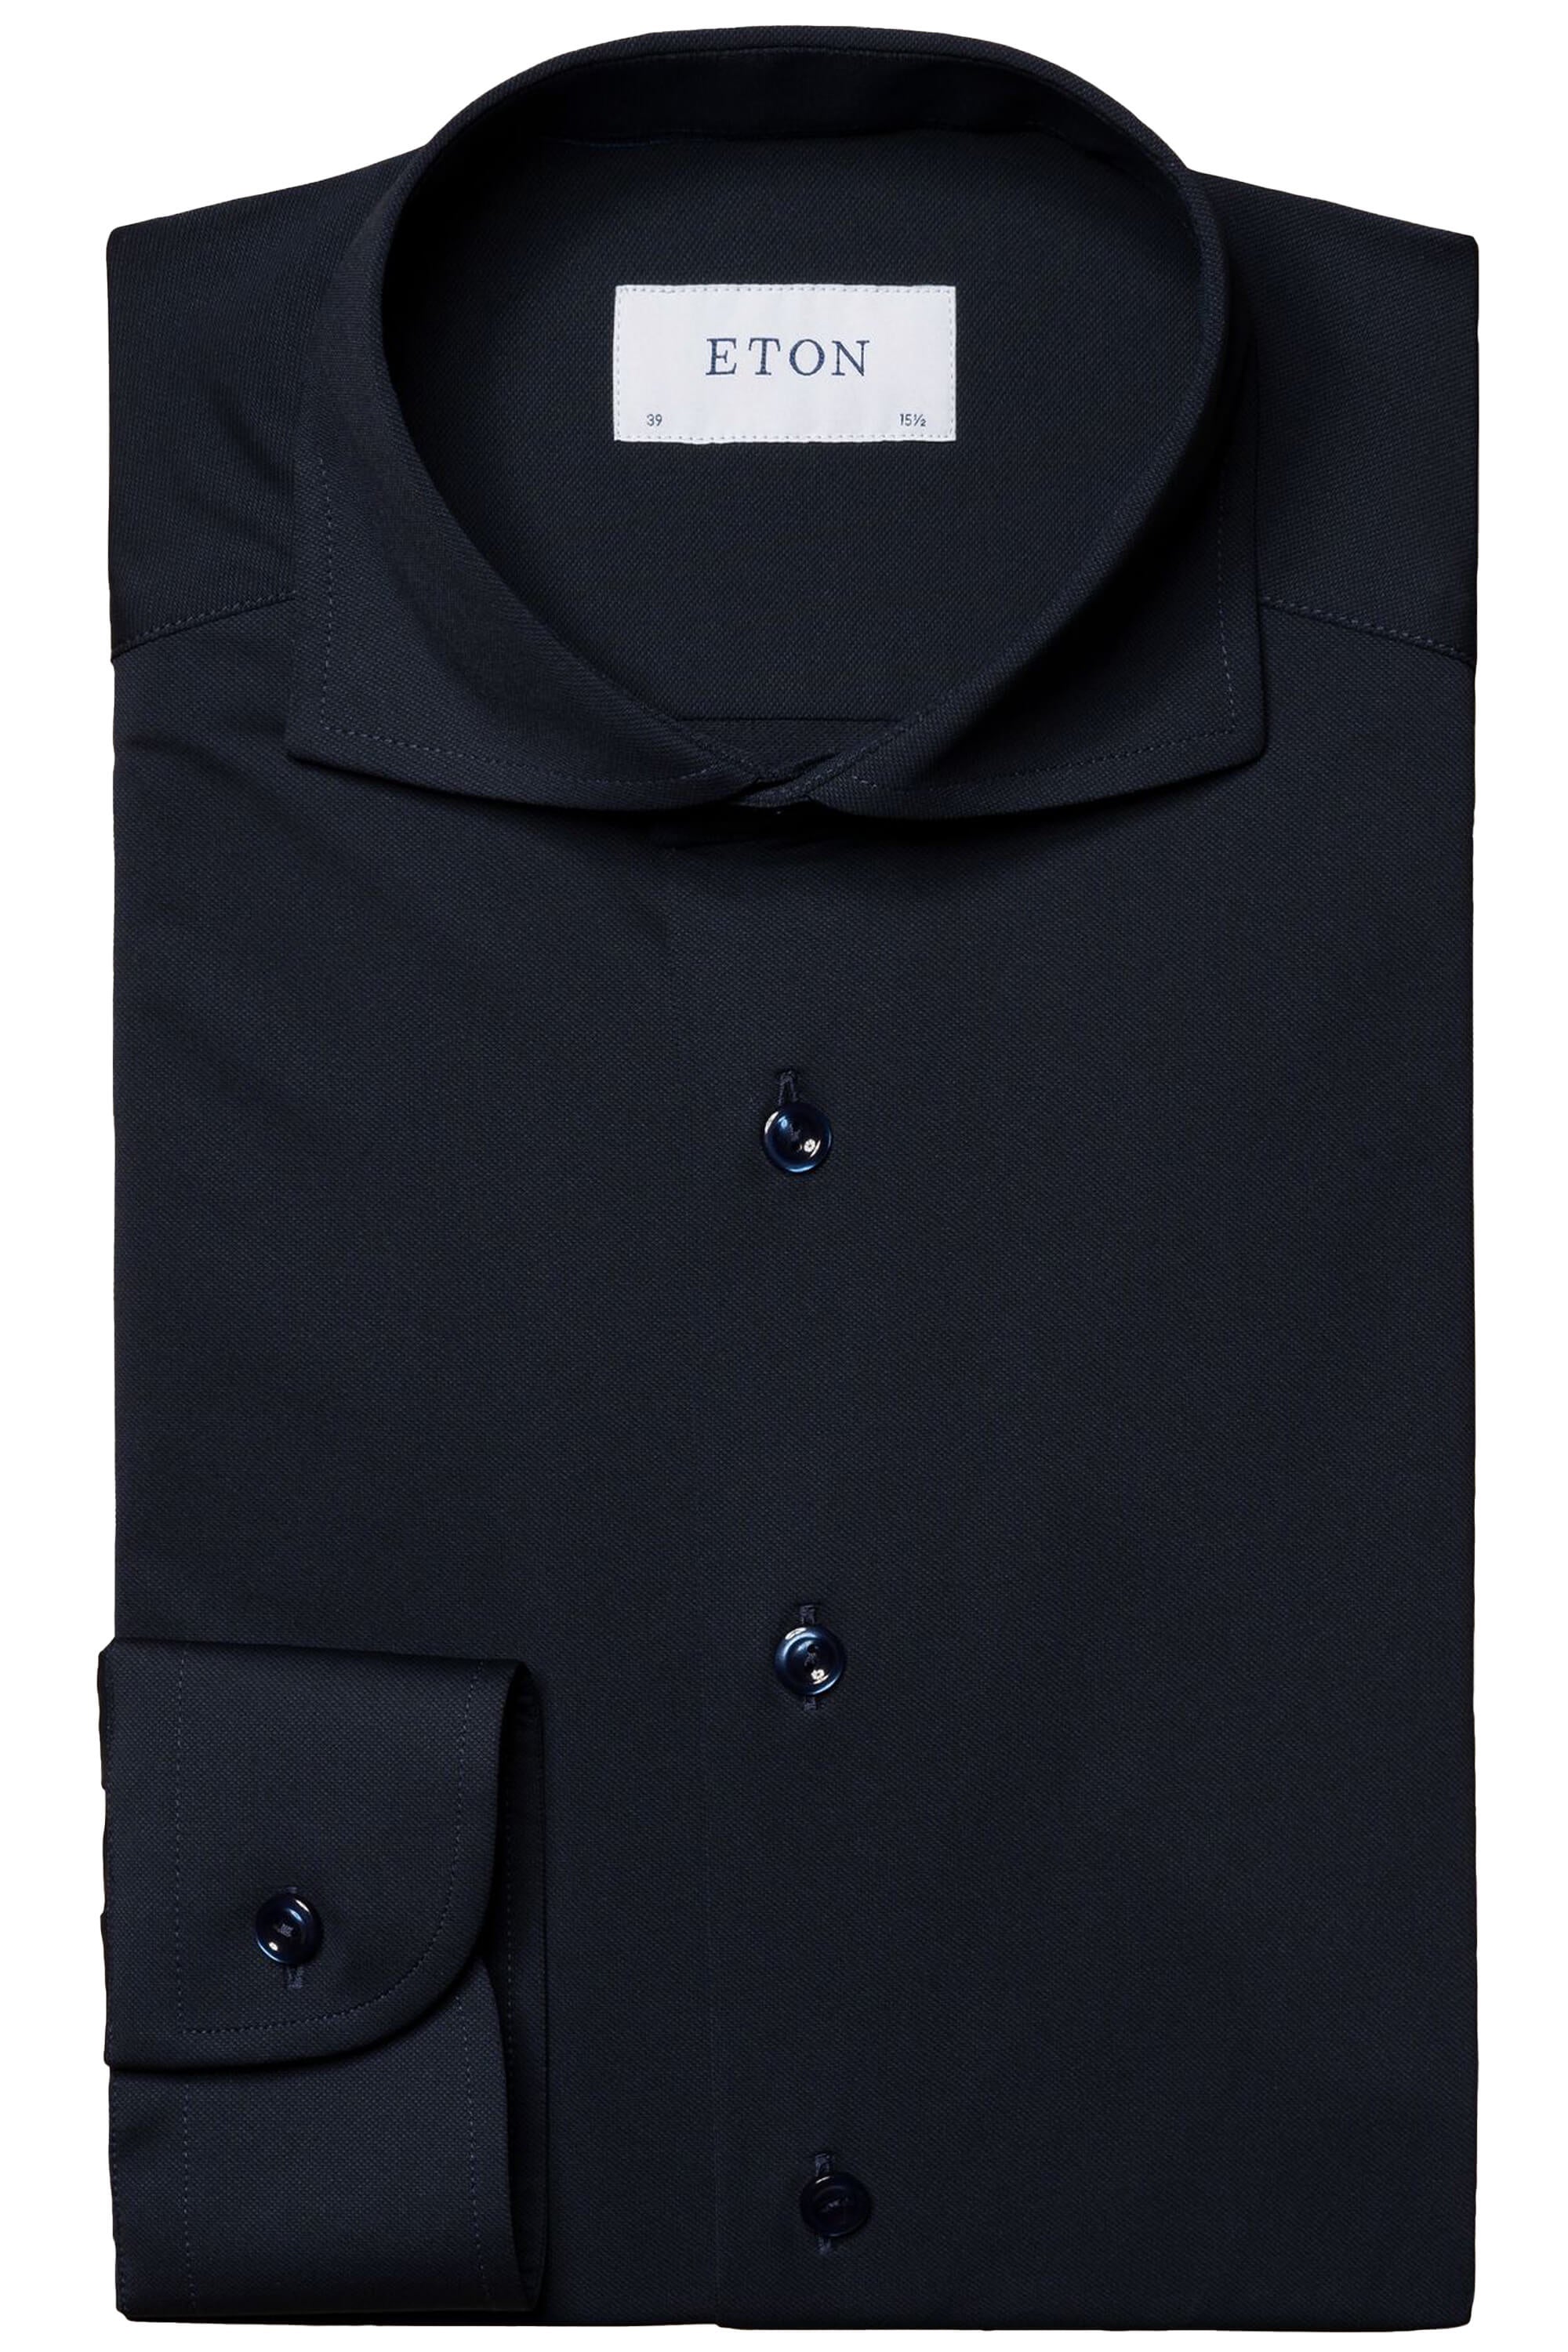 Eton Navy Blue Four-Way Stretch Shirt